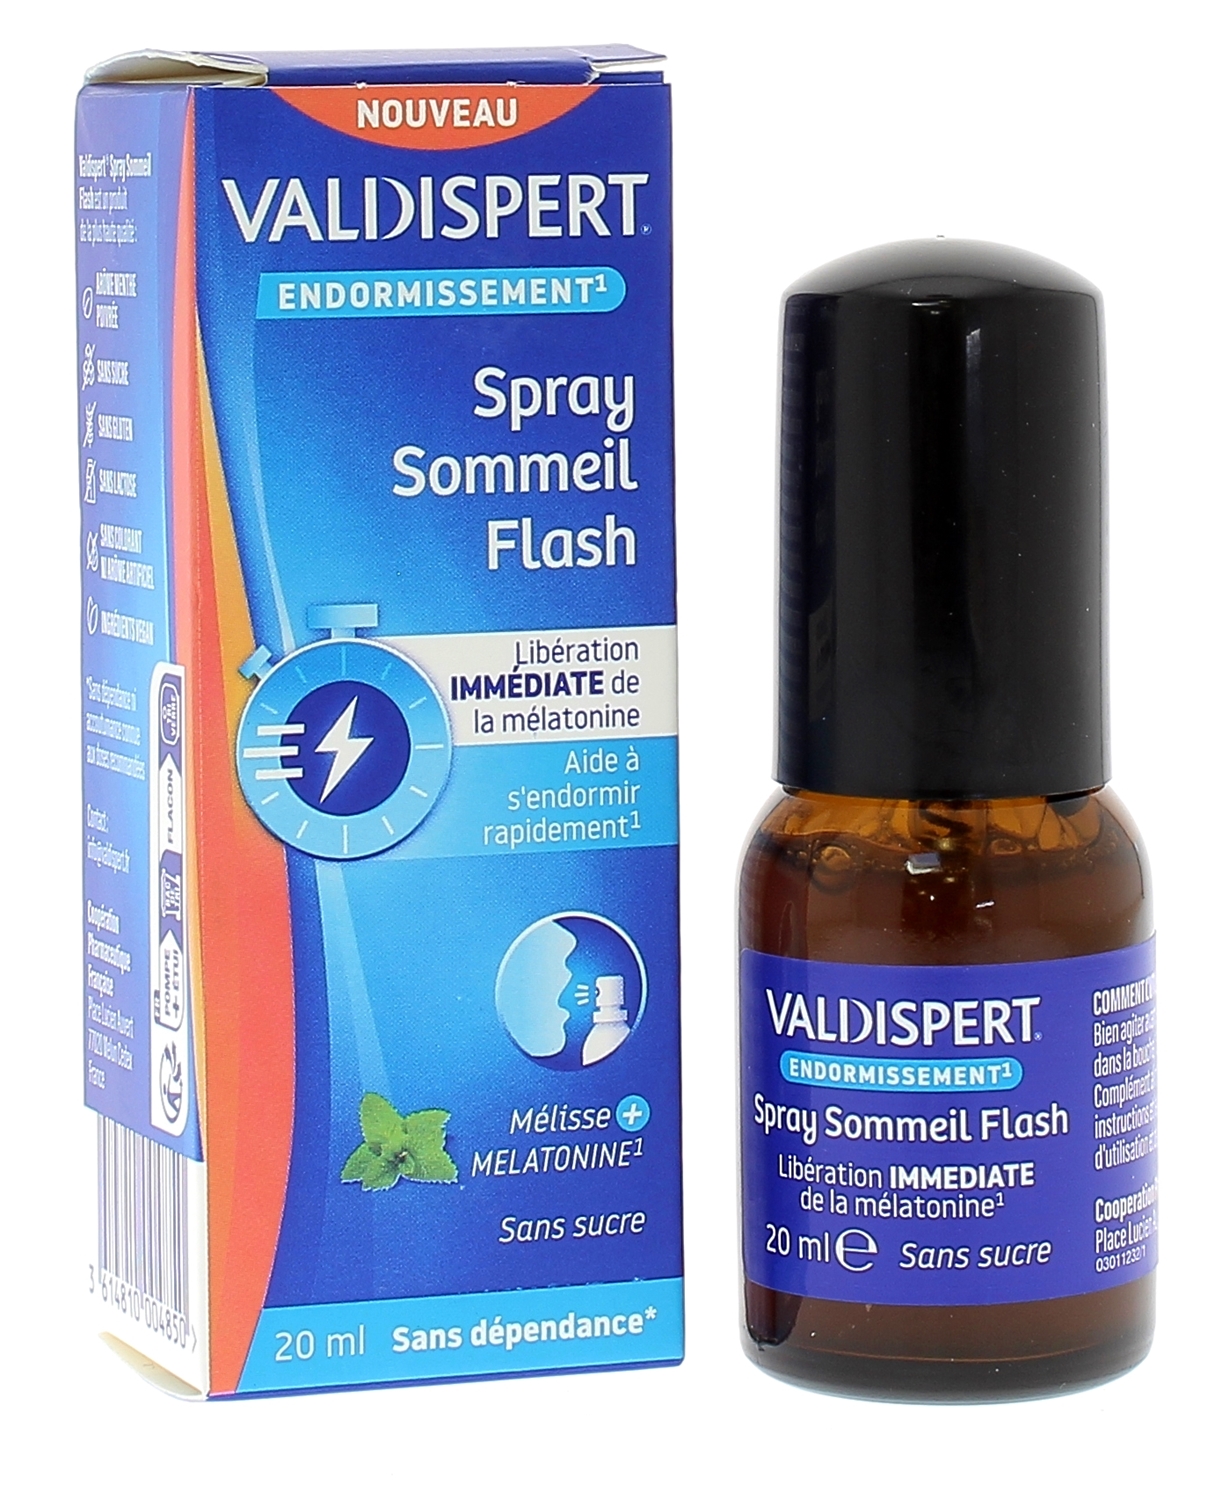 Spray sommeil flash Valdispert - spray de 20ml